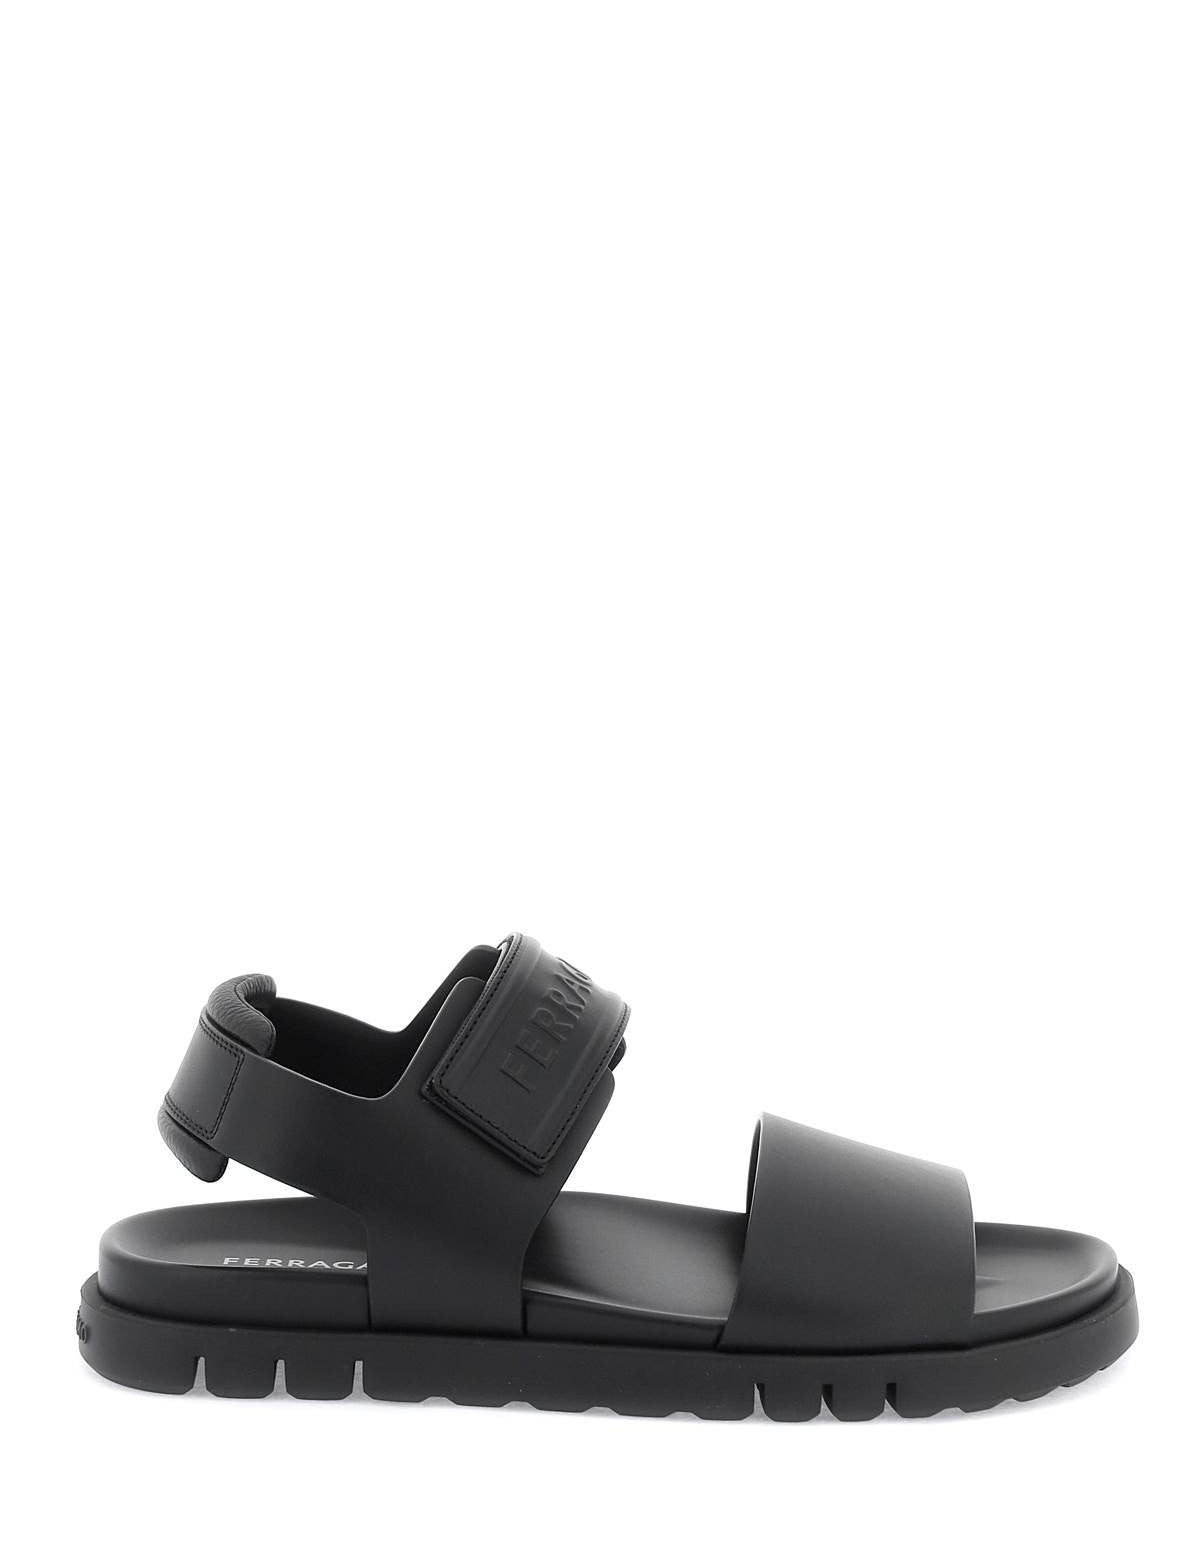 salvatore-ferragamo-double-strap-sandals-with-stylish-design.jpg